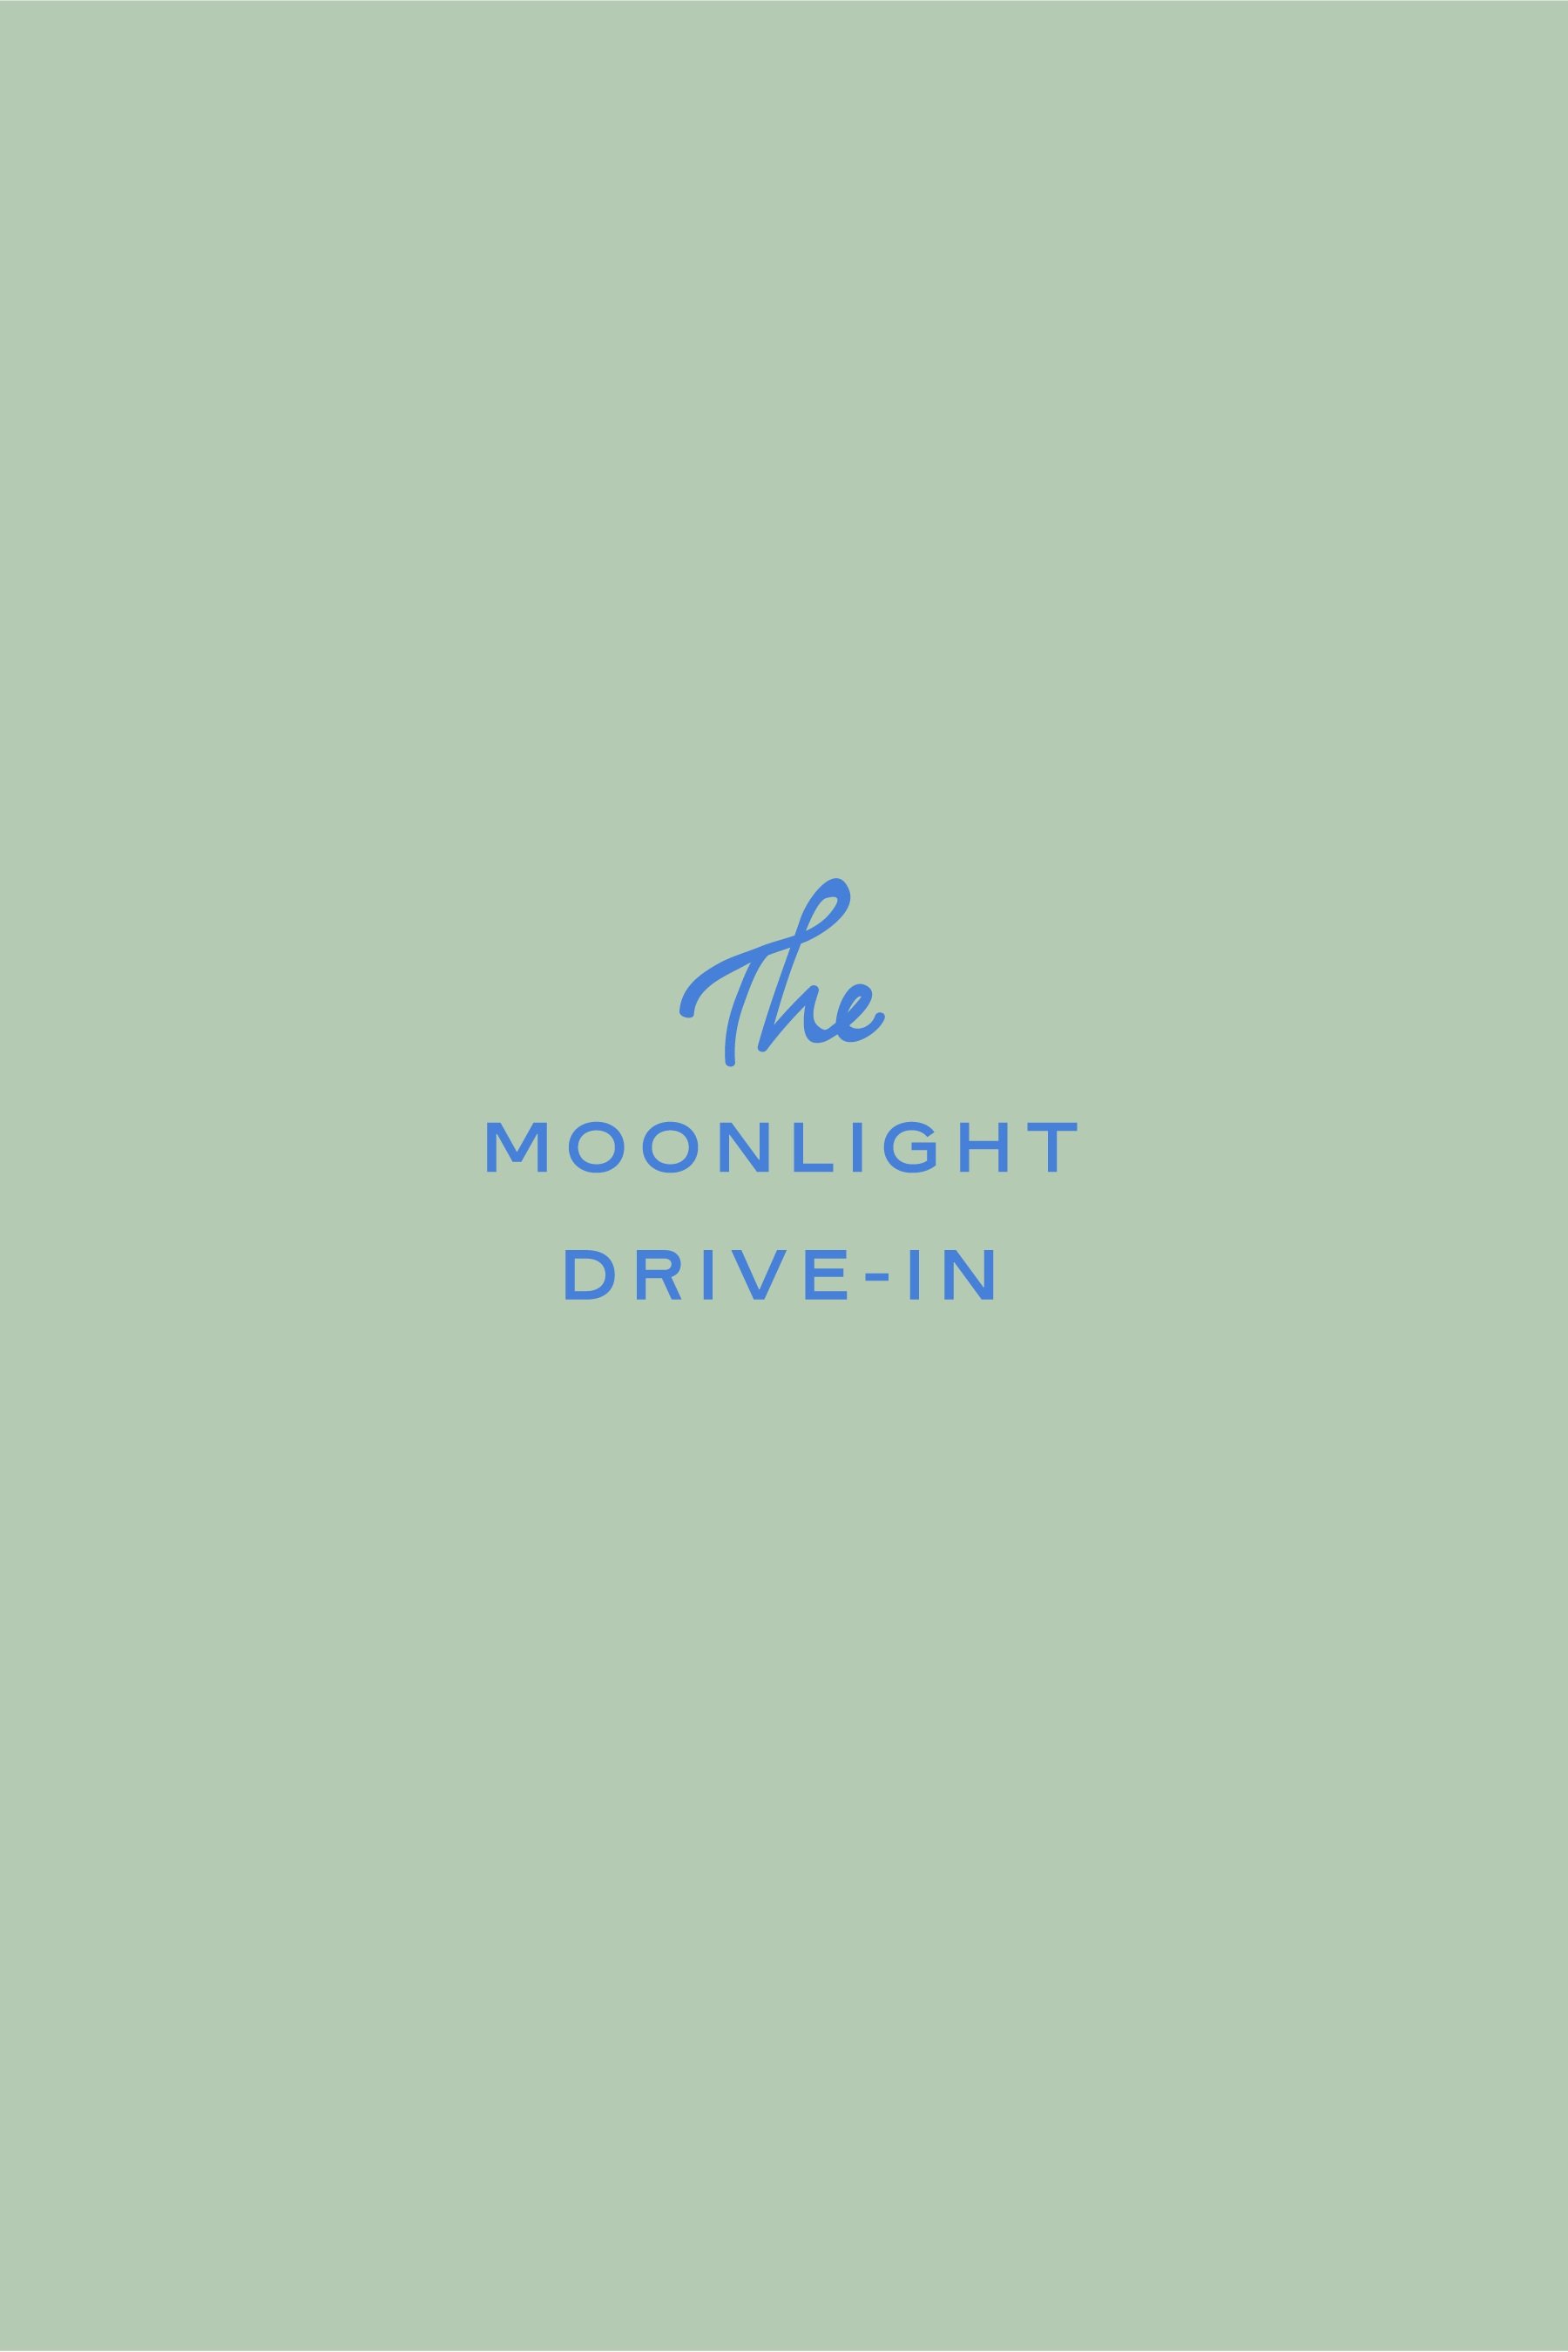 Moonlight+Drive-In+Logo+Design.jpg